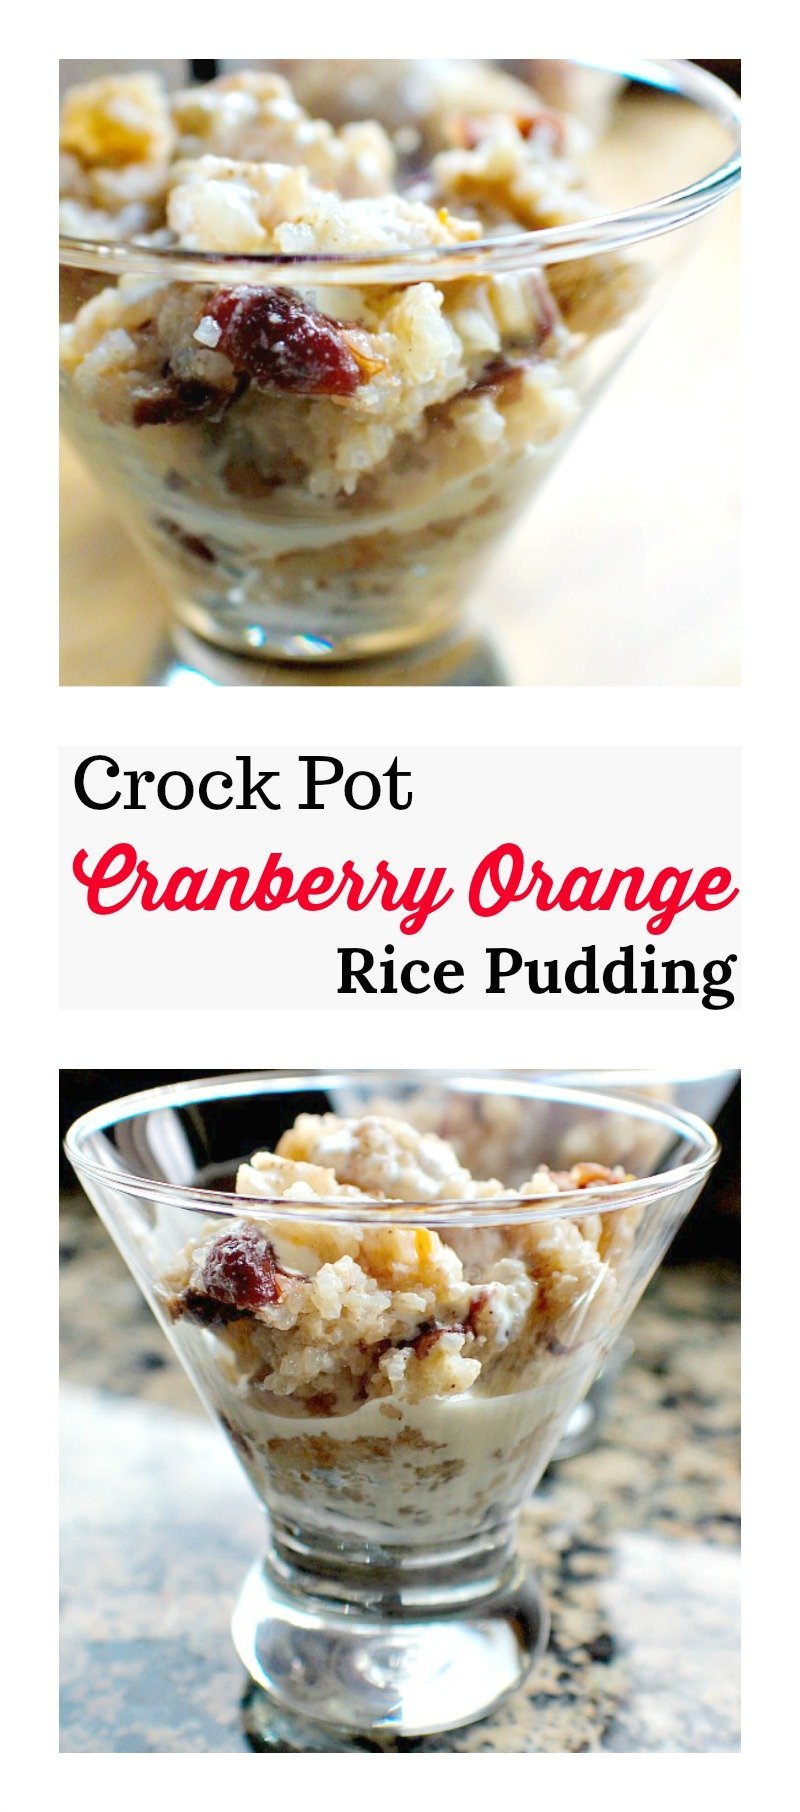 Crock Pot Cranberry Orange Rice Pudding | A Cork, Fork, & Passport